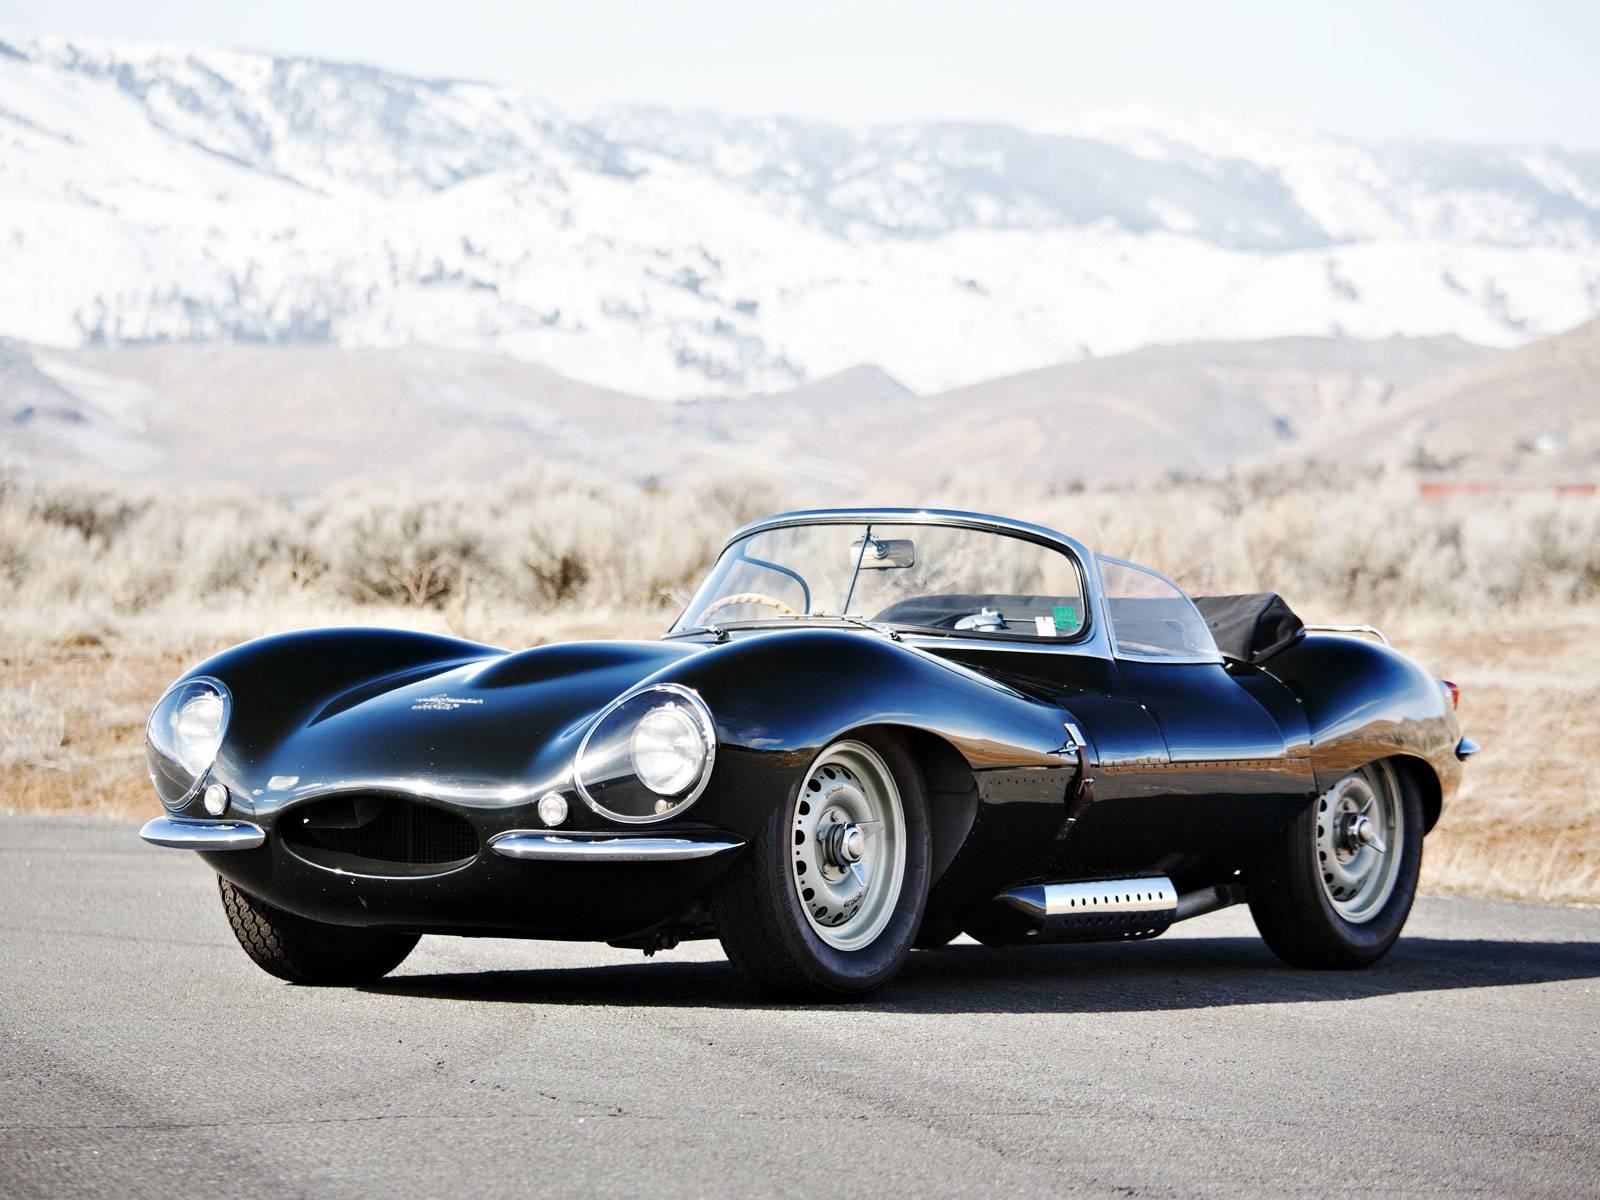 alt="1957 Jaguar XKSS"